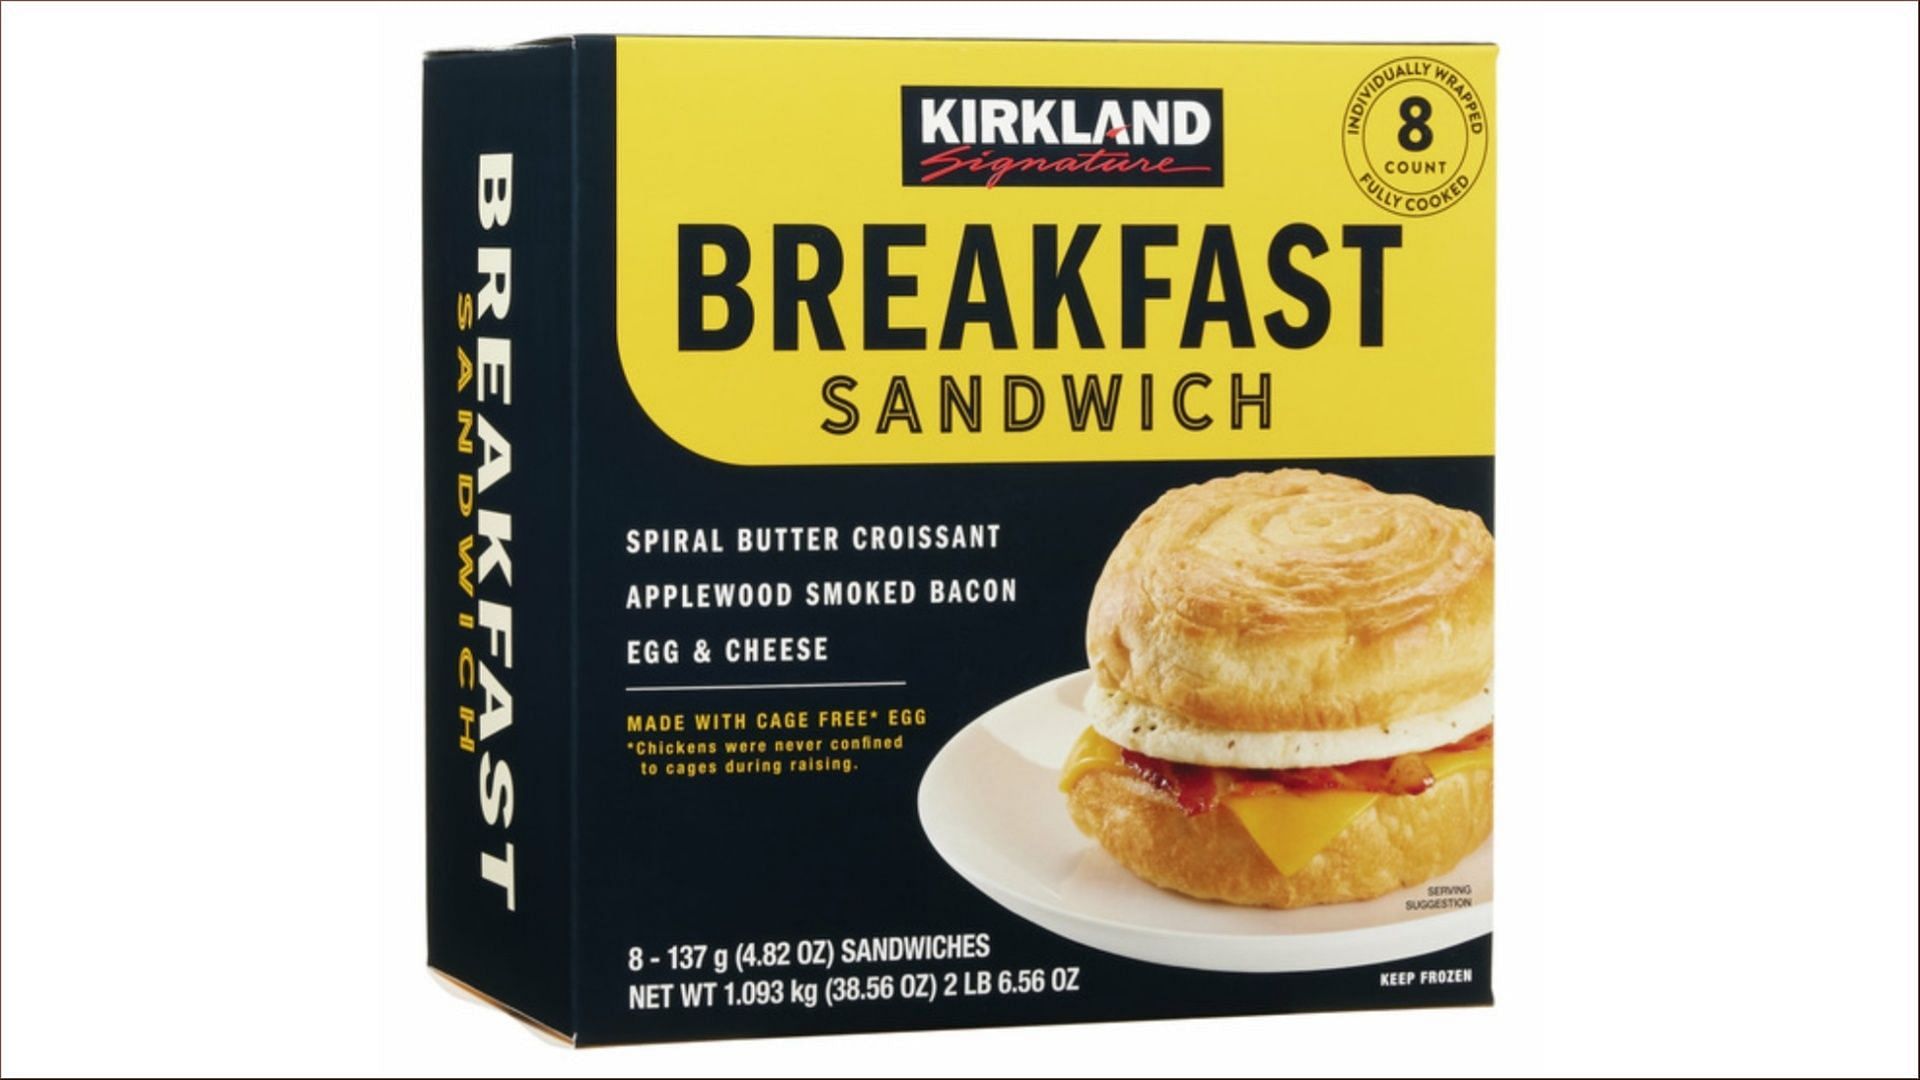 Kirkland Signature Frozen Croissant Breakfast Sandwiches (Image via Instacart)